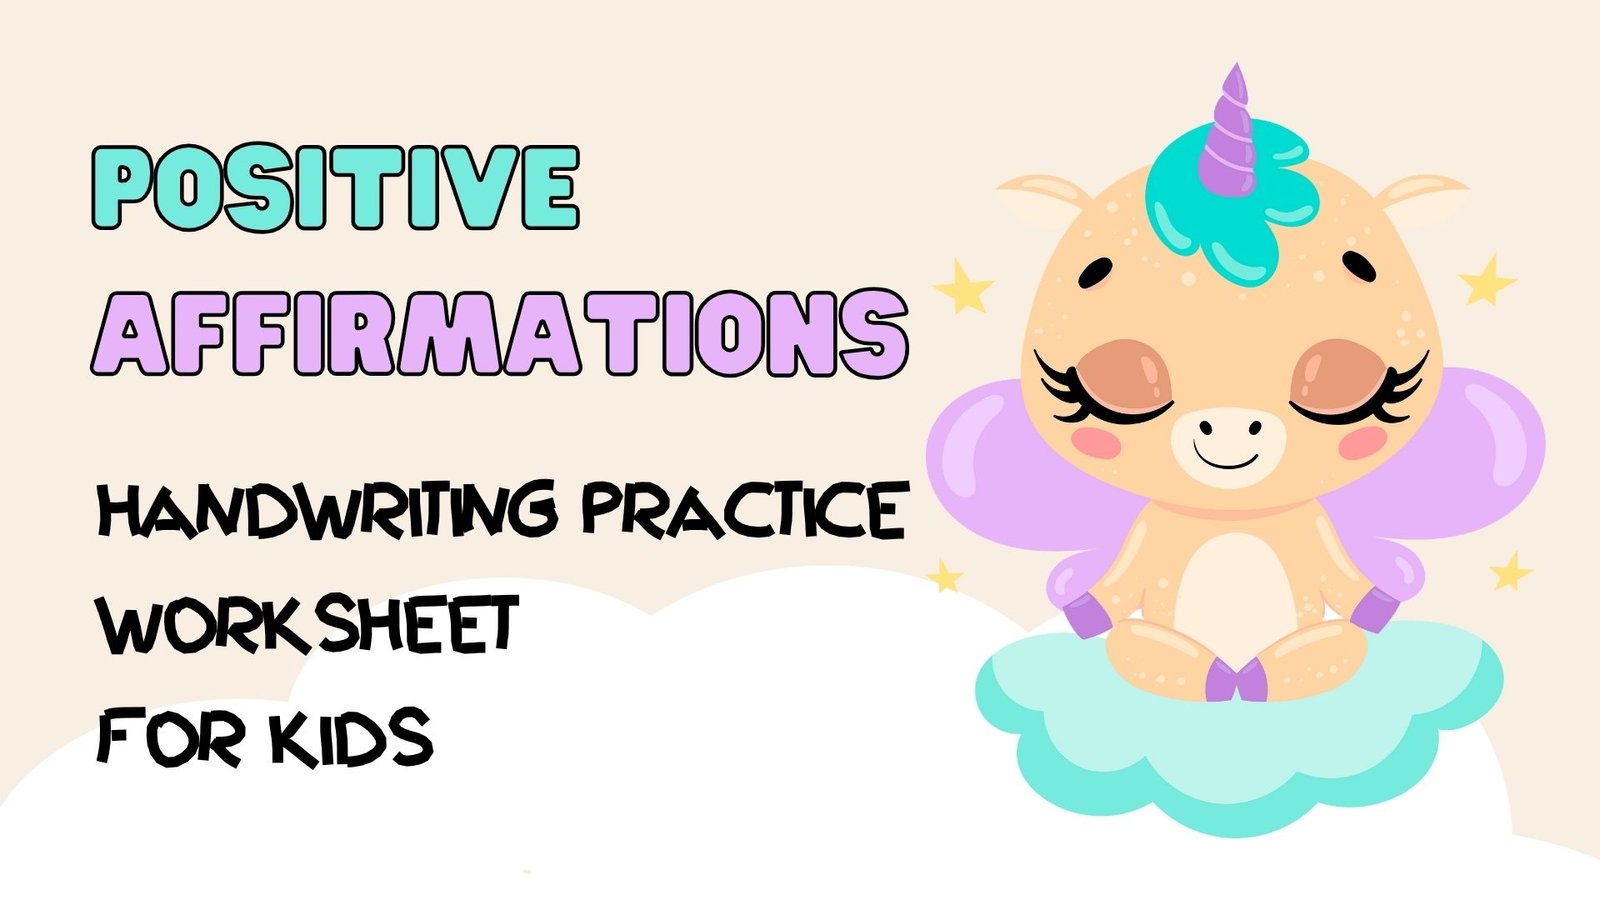 10 Positive Affirmation Handwriting Practice Worksheets for kids